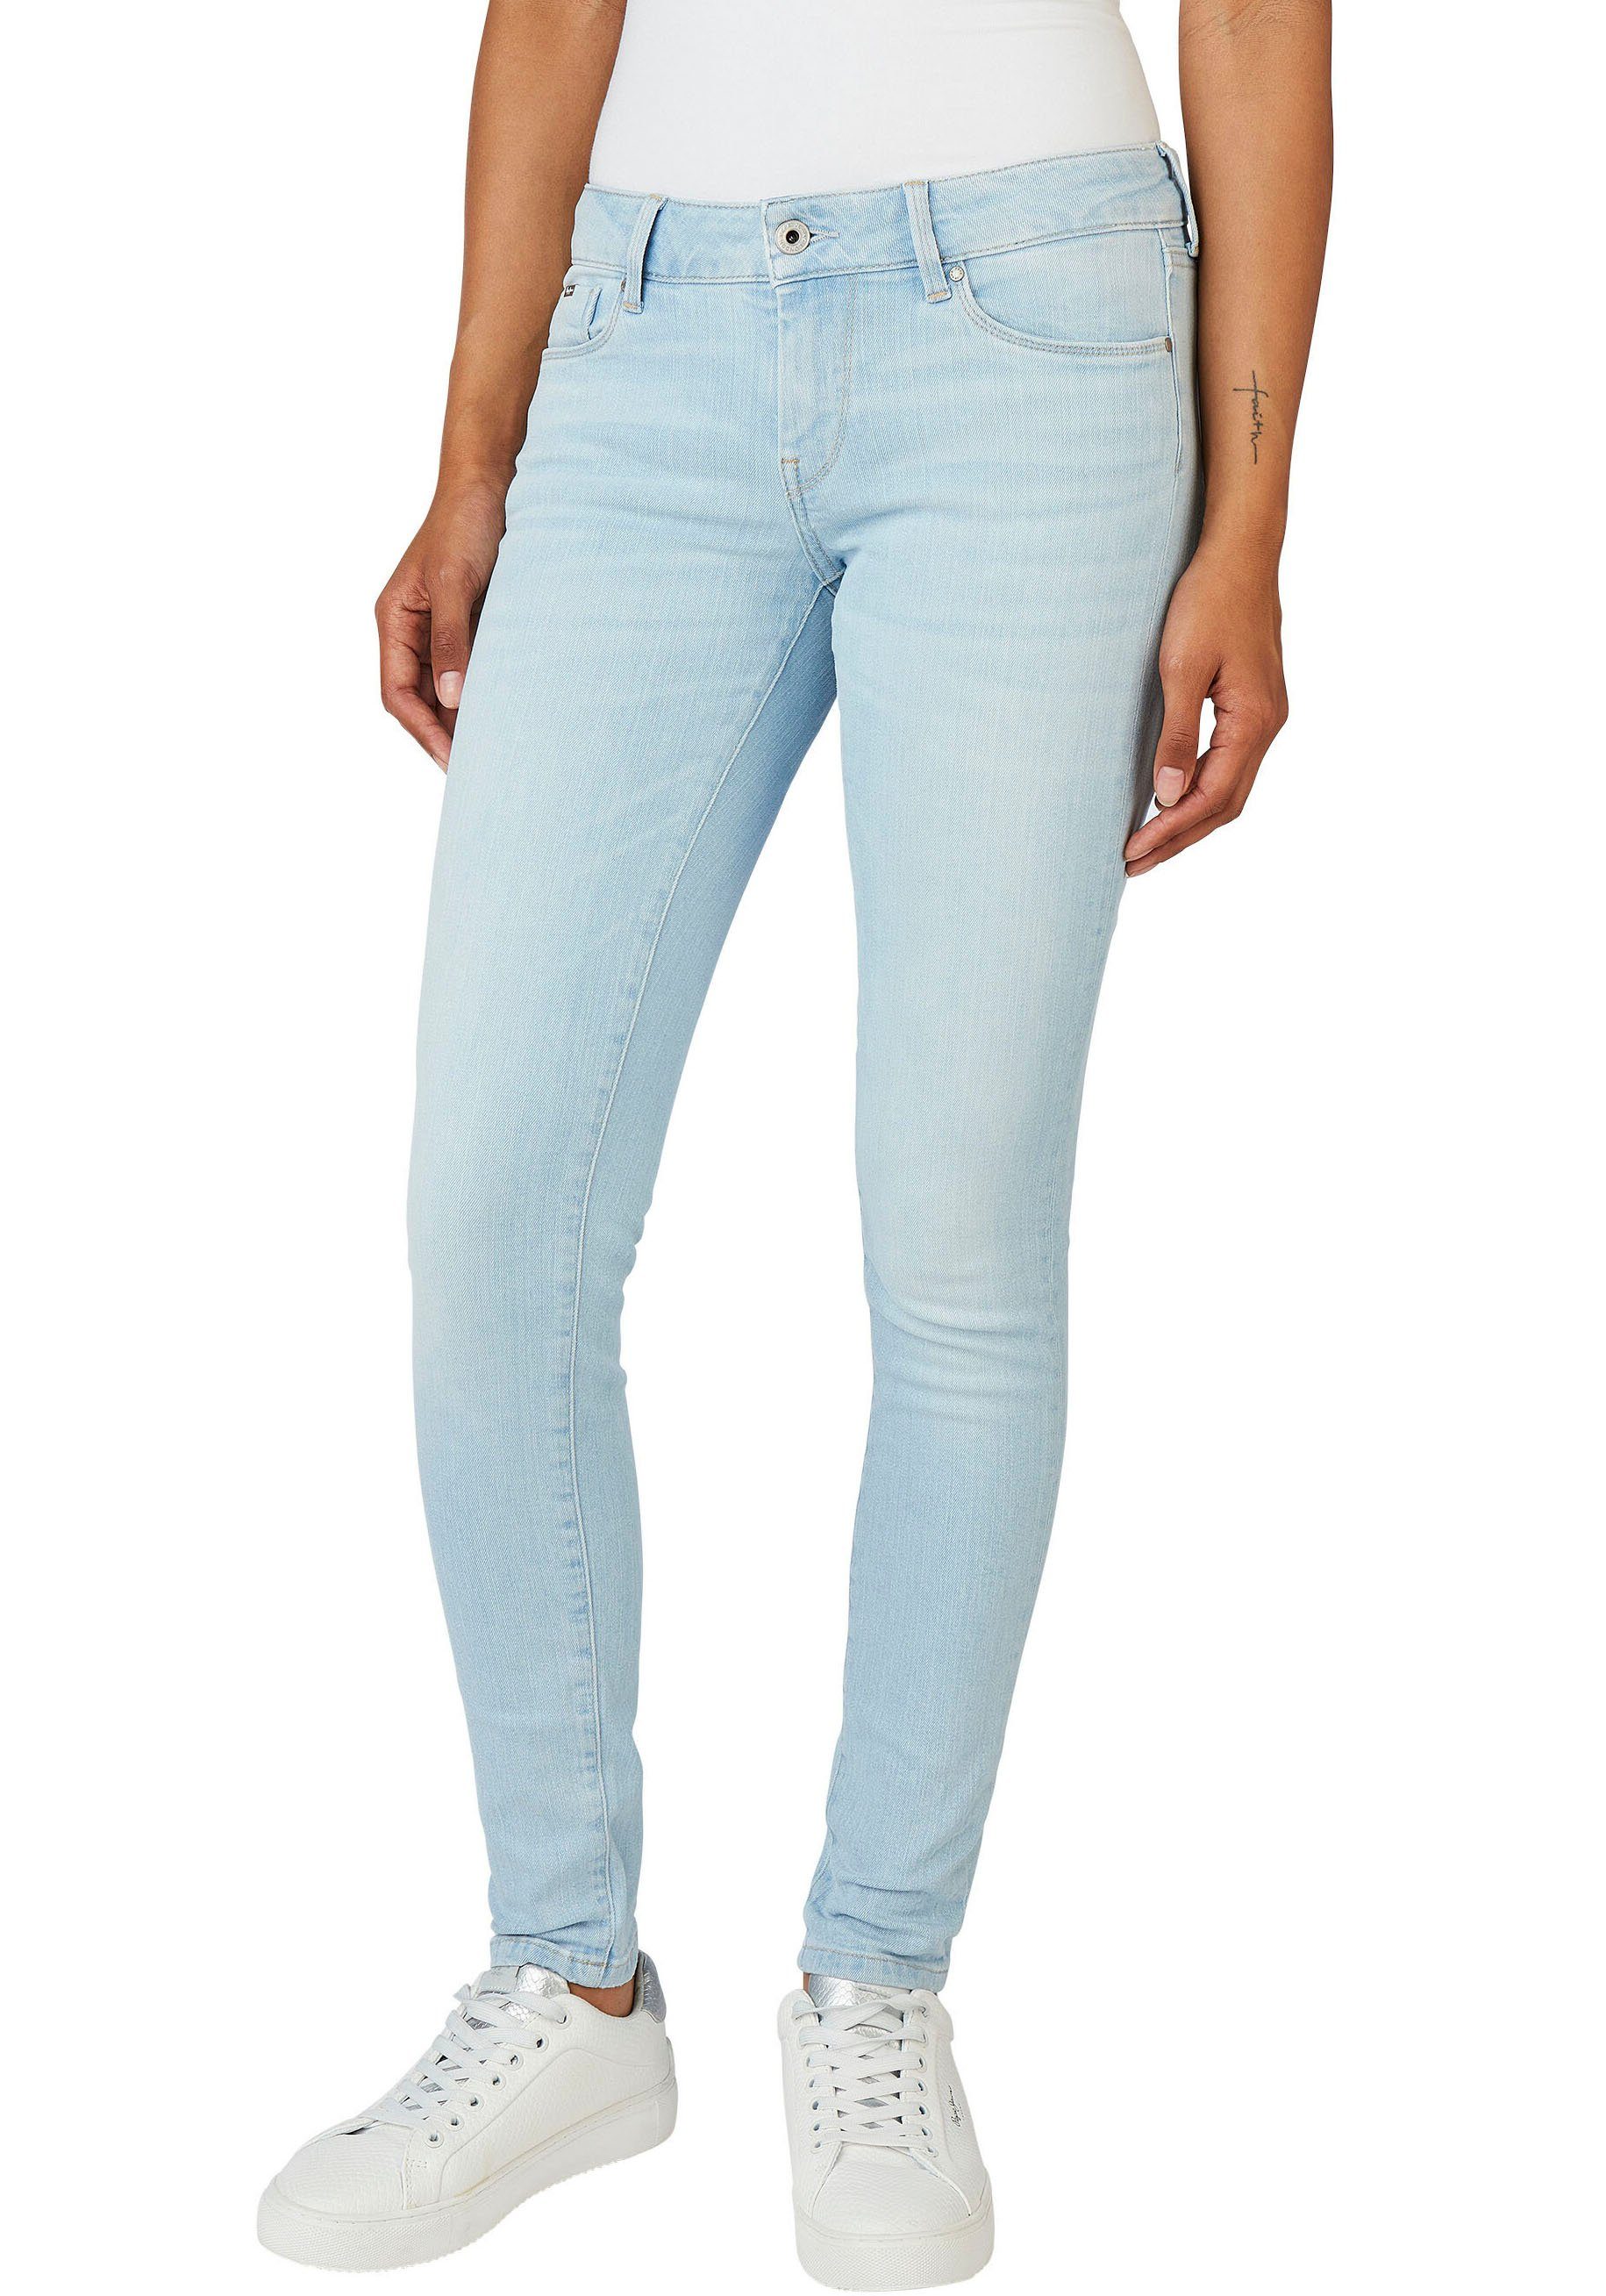 Pepe Jeans Skinny-fit-Jeans SOHO im 5-Pocket-Stil mit 1-Knopf Bund und Stretch-Anteil hell | 